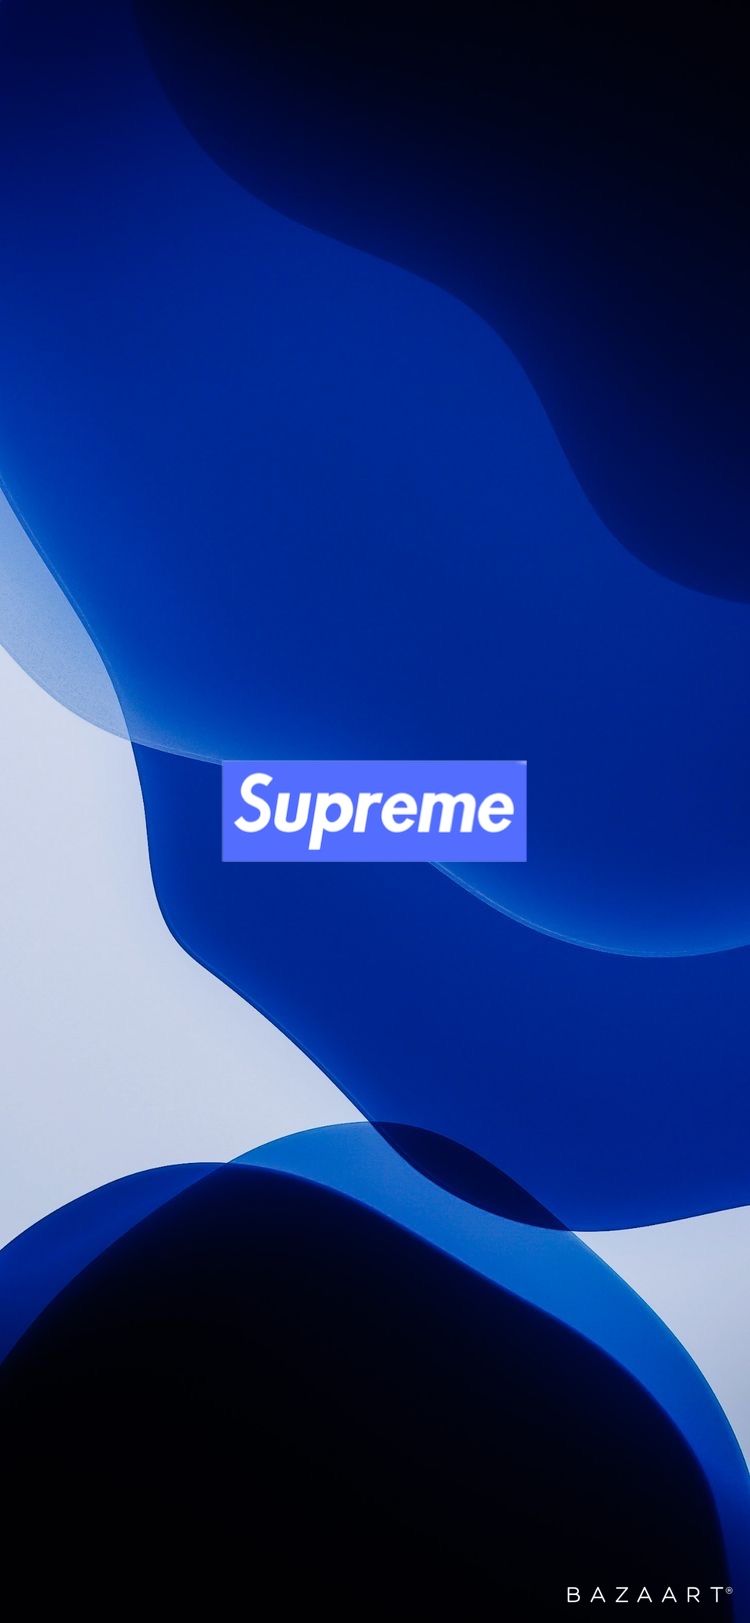 supreme x iOS 13 wallpaper. Black and blue wallpaper, Hypebeast wallpaper, Hypebeast iphone wallpaper